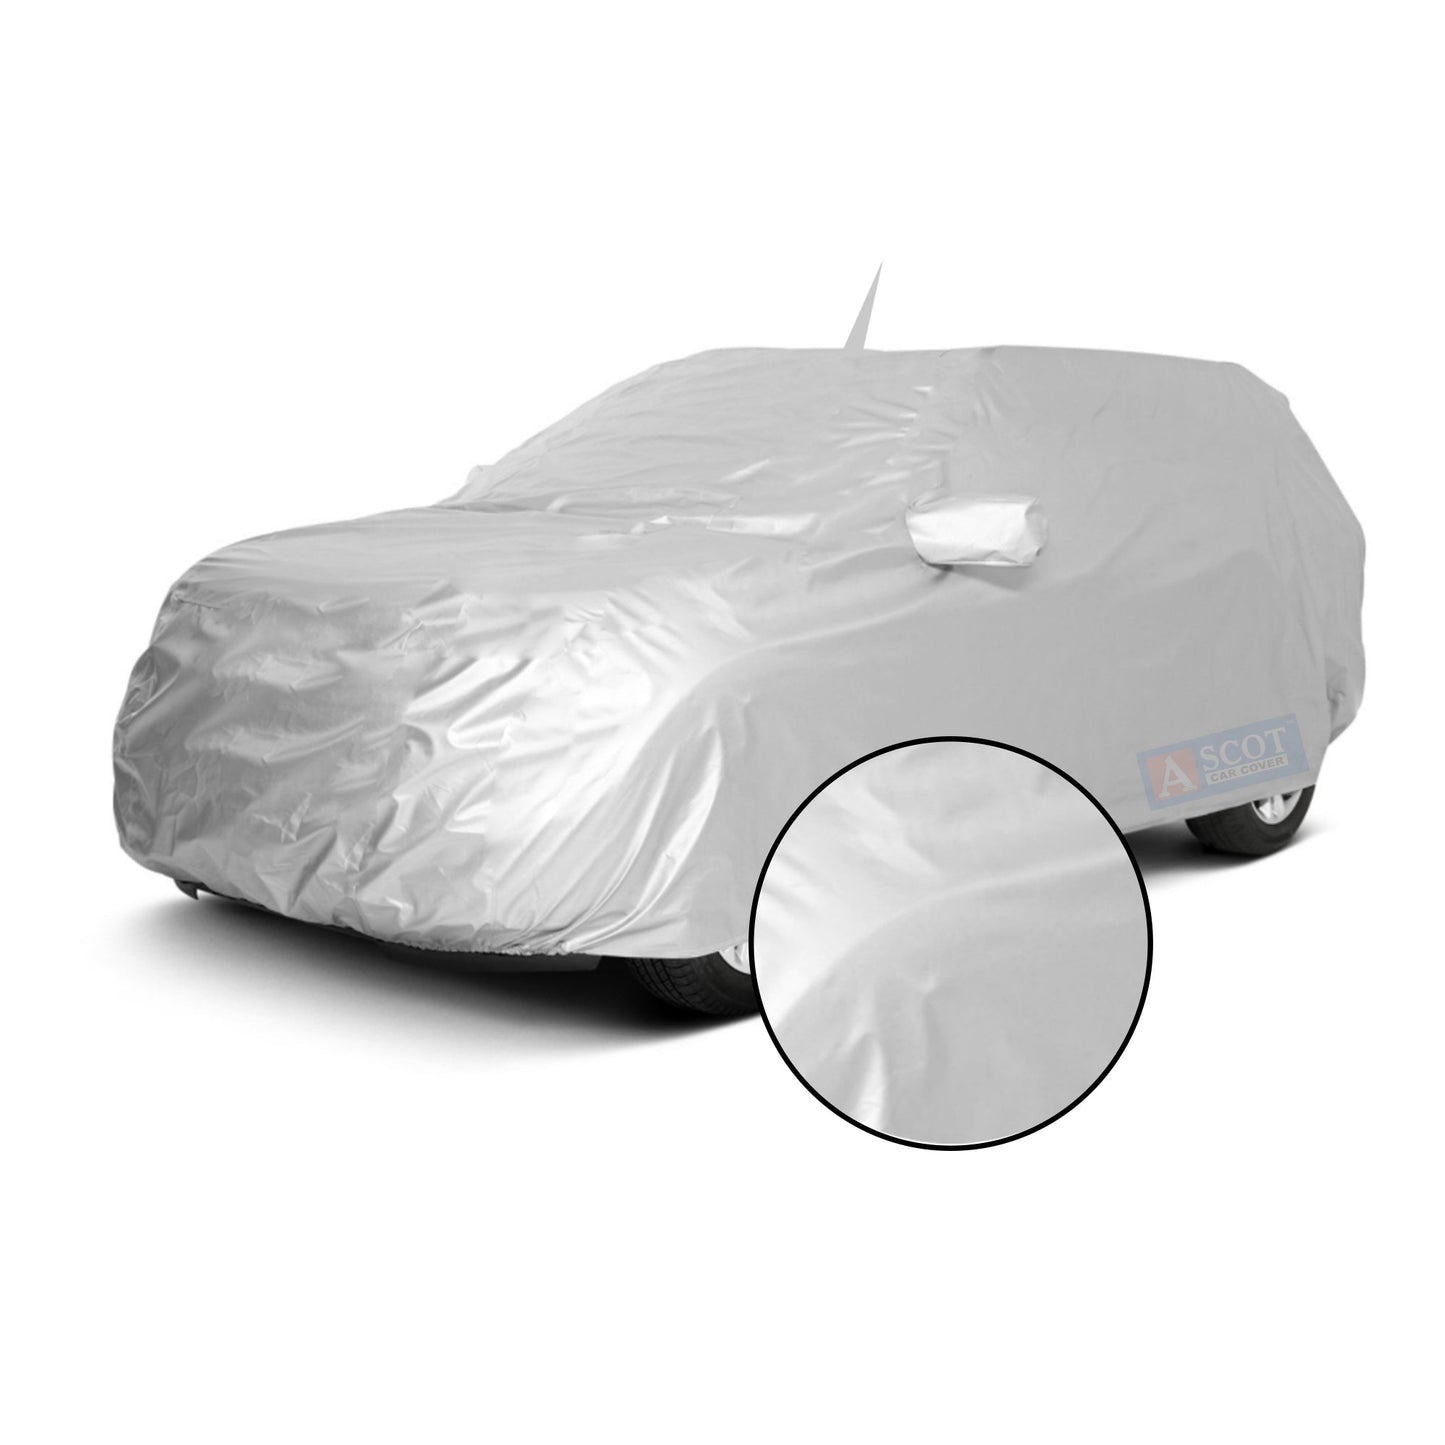 Ascot Mahindra Marazzo Car Body Cover Dust Proof, Trippel Stitched